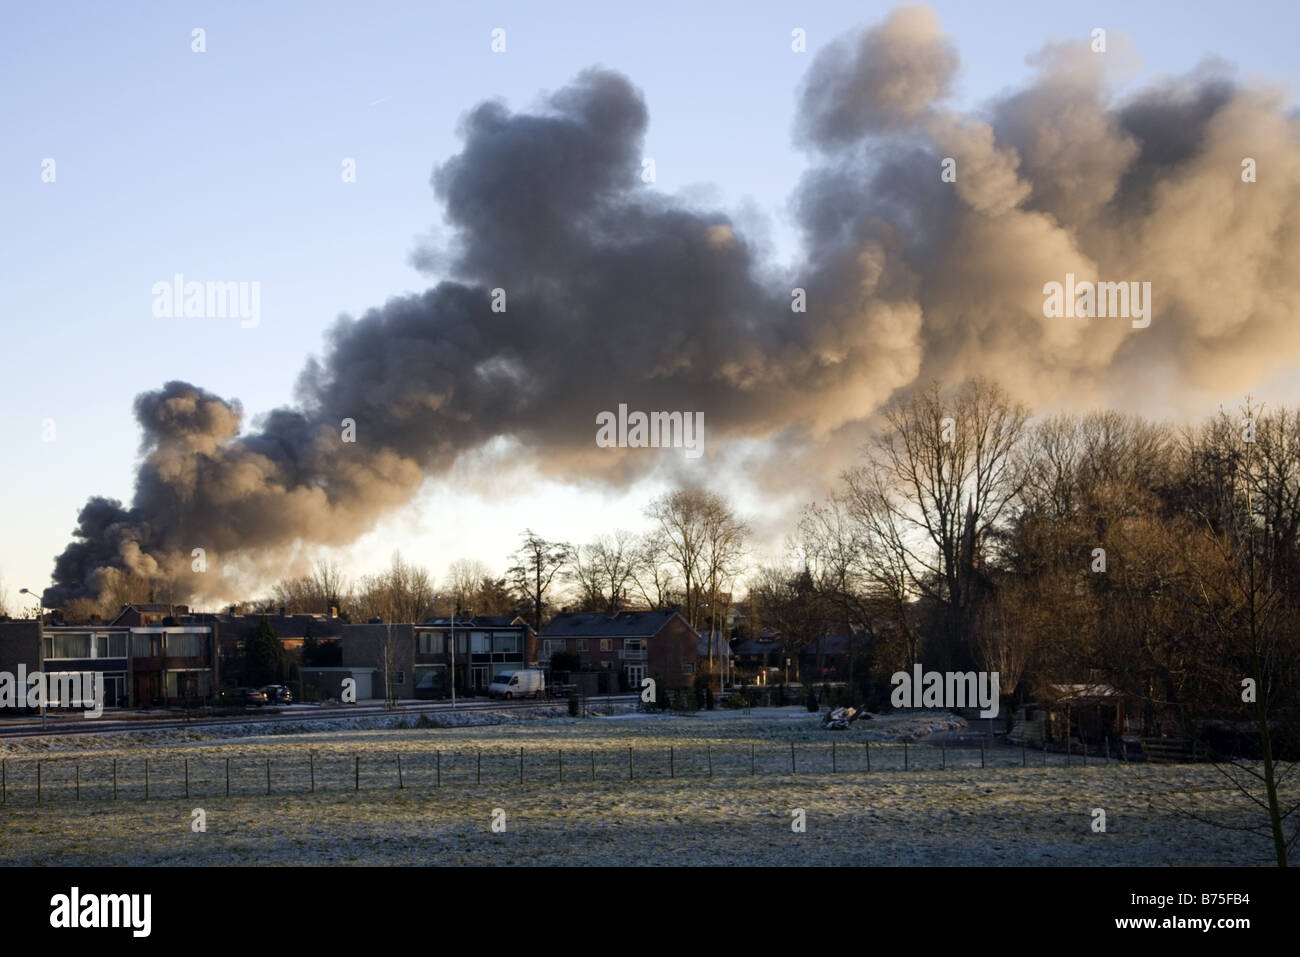 Ghirlanda di fumo da incendio in un garage, Alblasserdam, Olanda Foto Stock